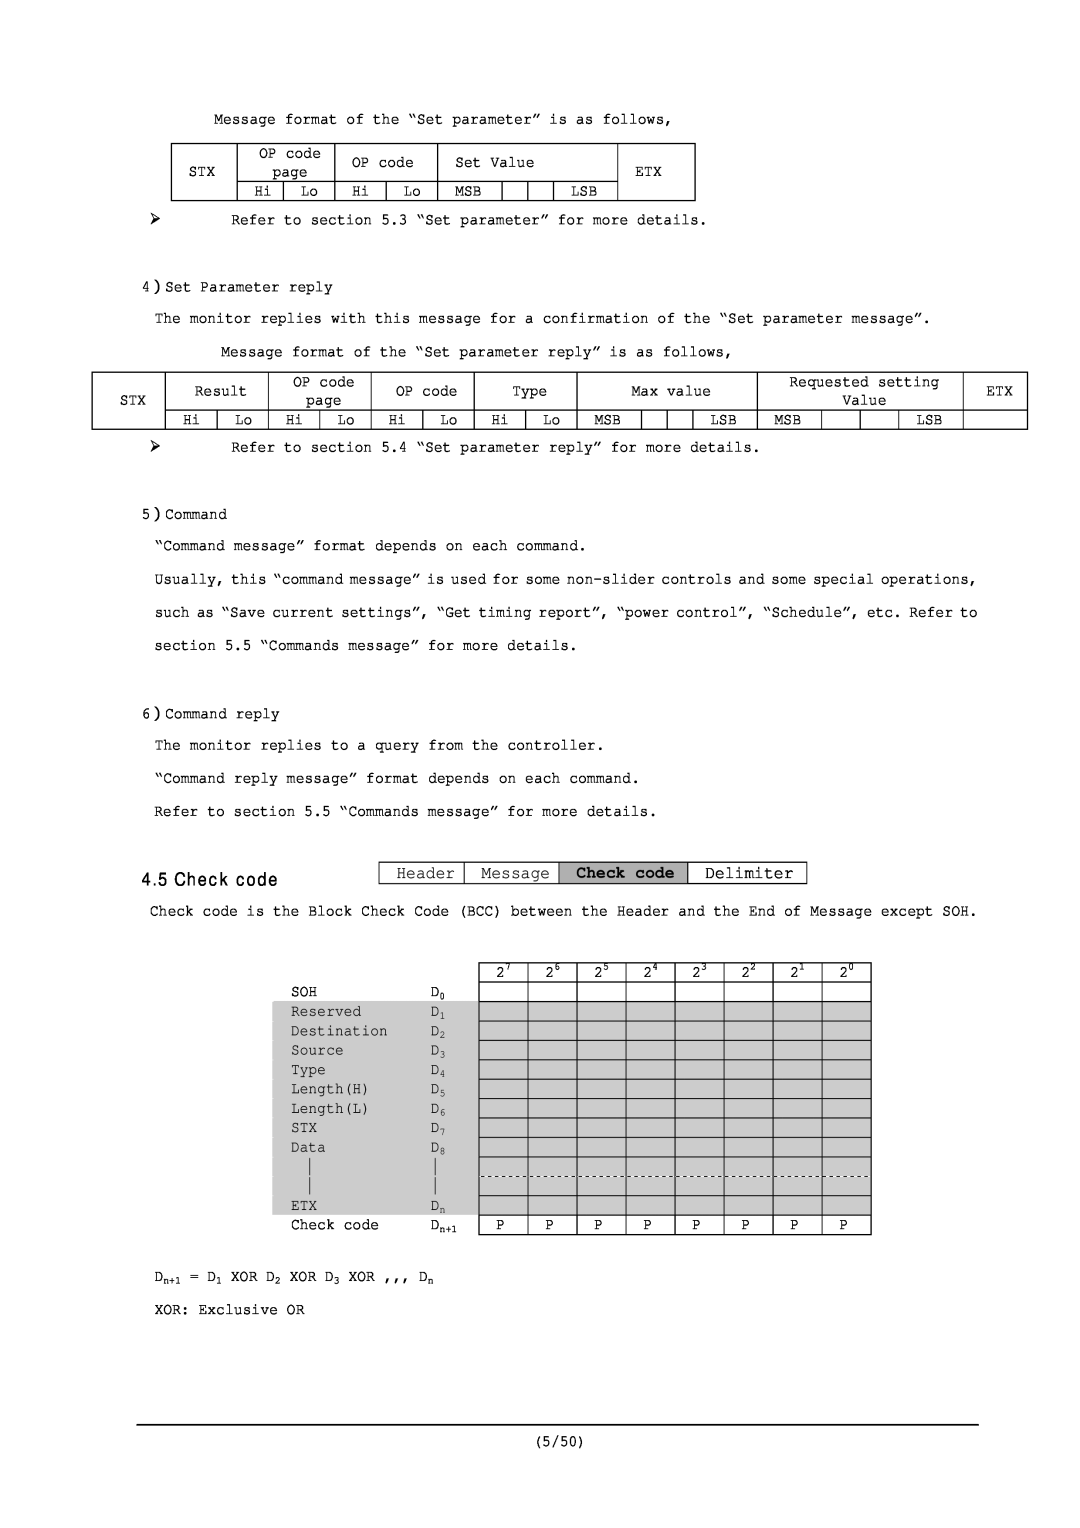 NEC RS-232C user manual Check code, Header Message, Delimiter 